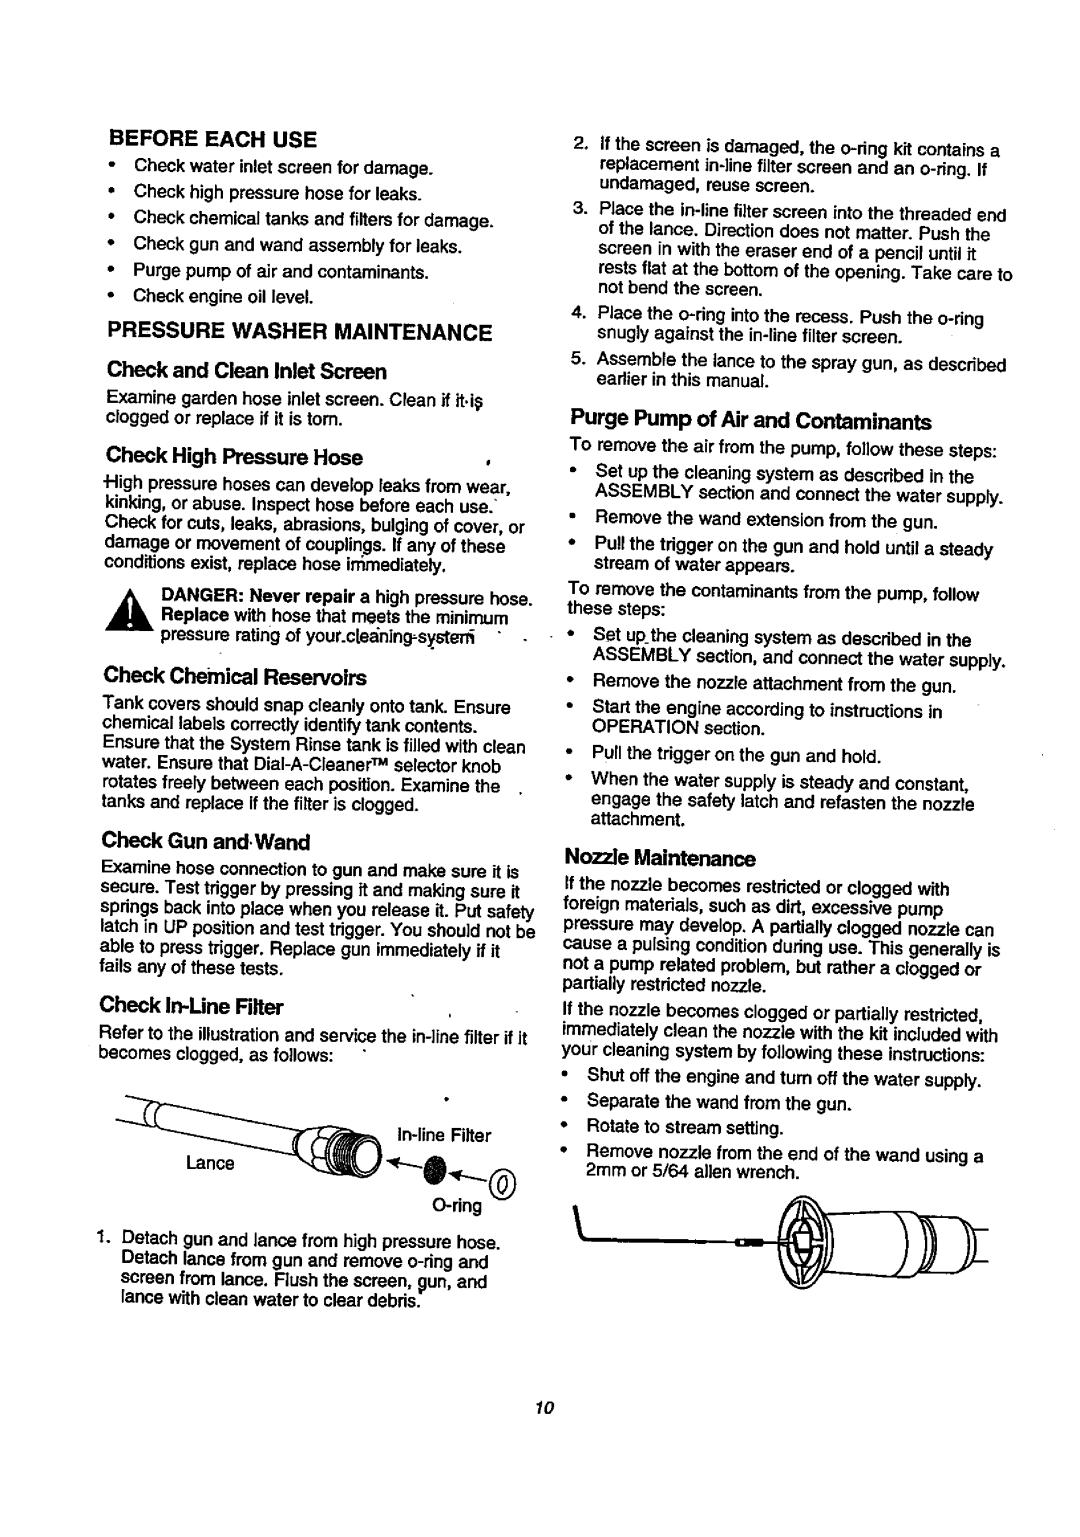 Craftsman 580.768020 manual O-ring, Check Chemical Reservoirs, Check Gun and.Wand, Nozzle Maintenance 